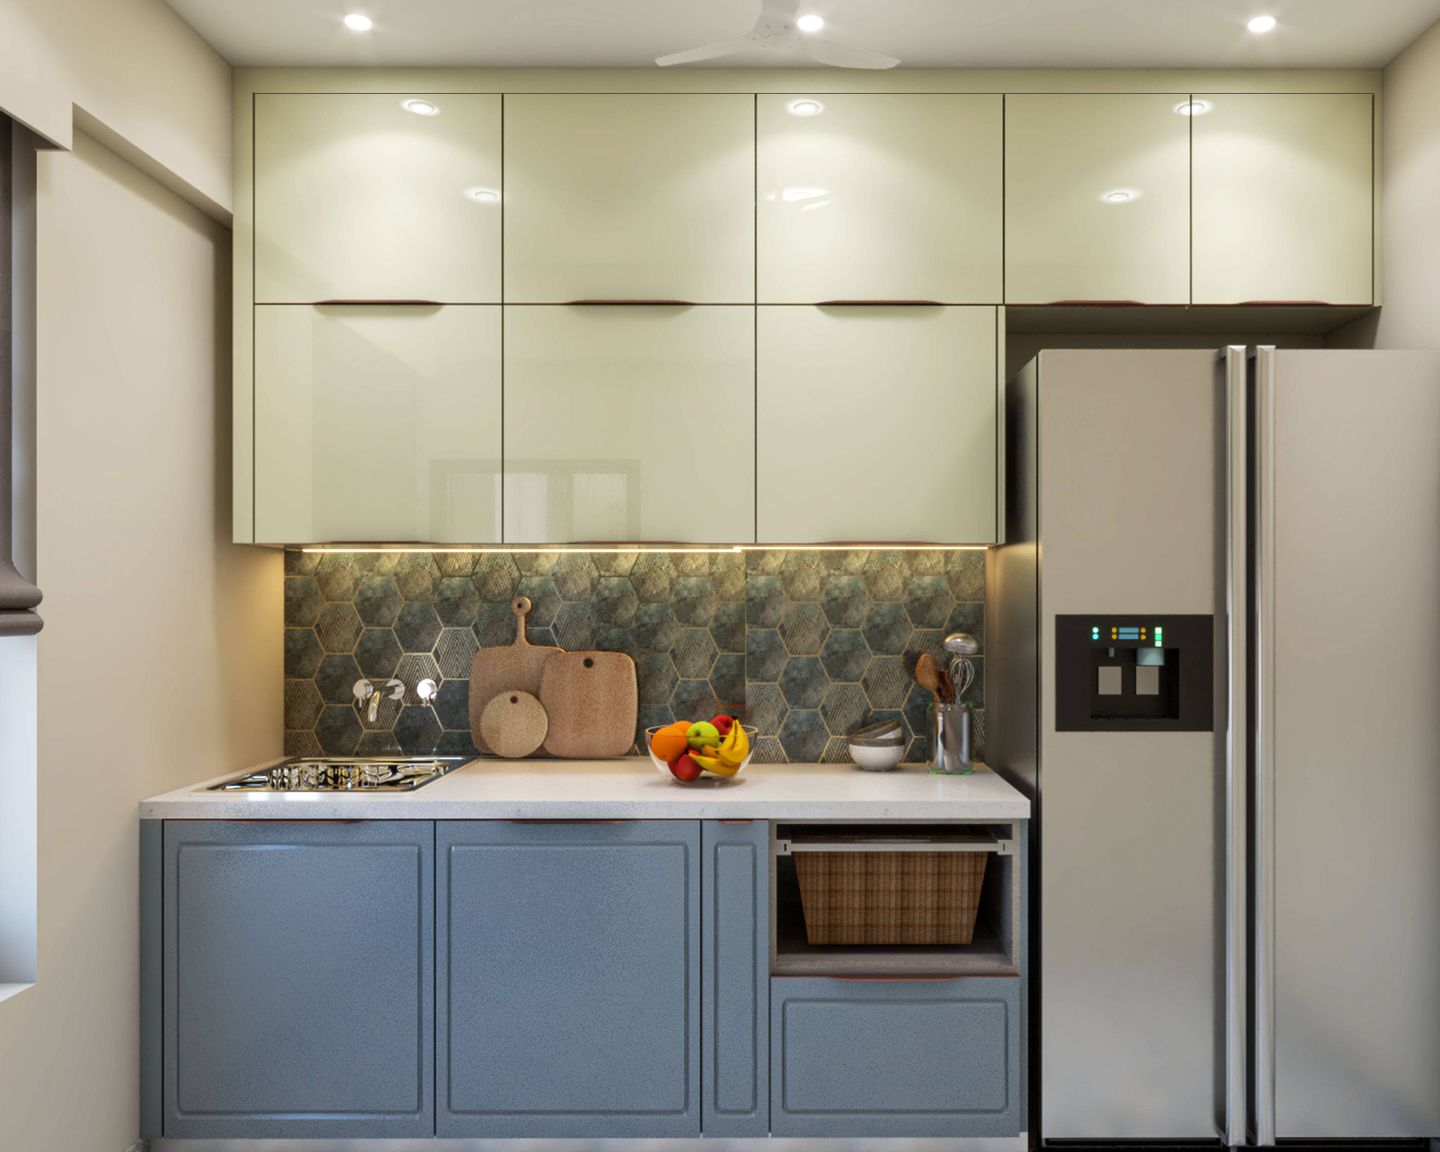 Modern Parallel Kitchen Design With Hexagonal Dado Tiles